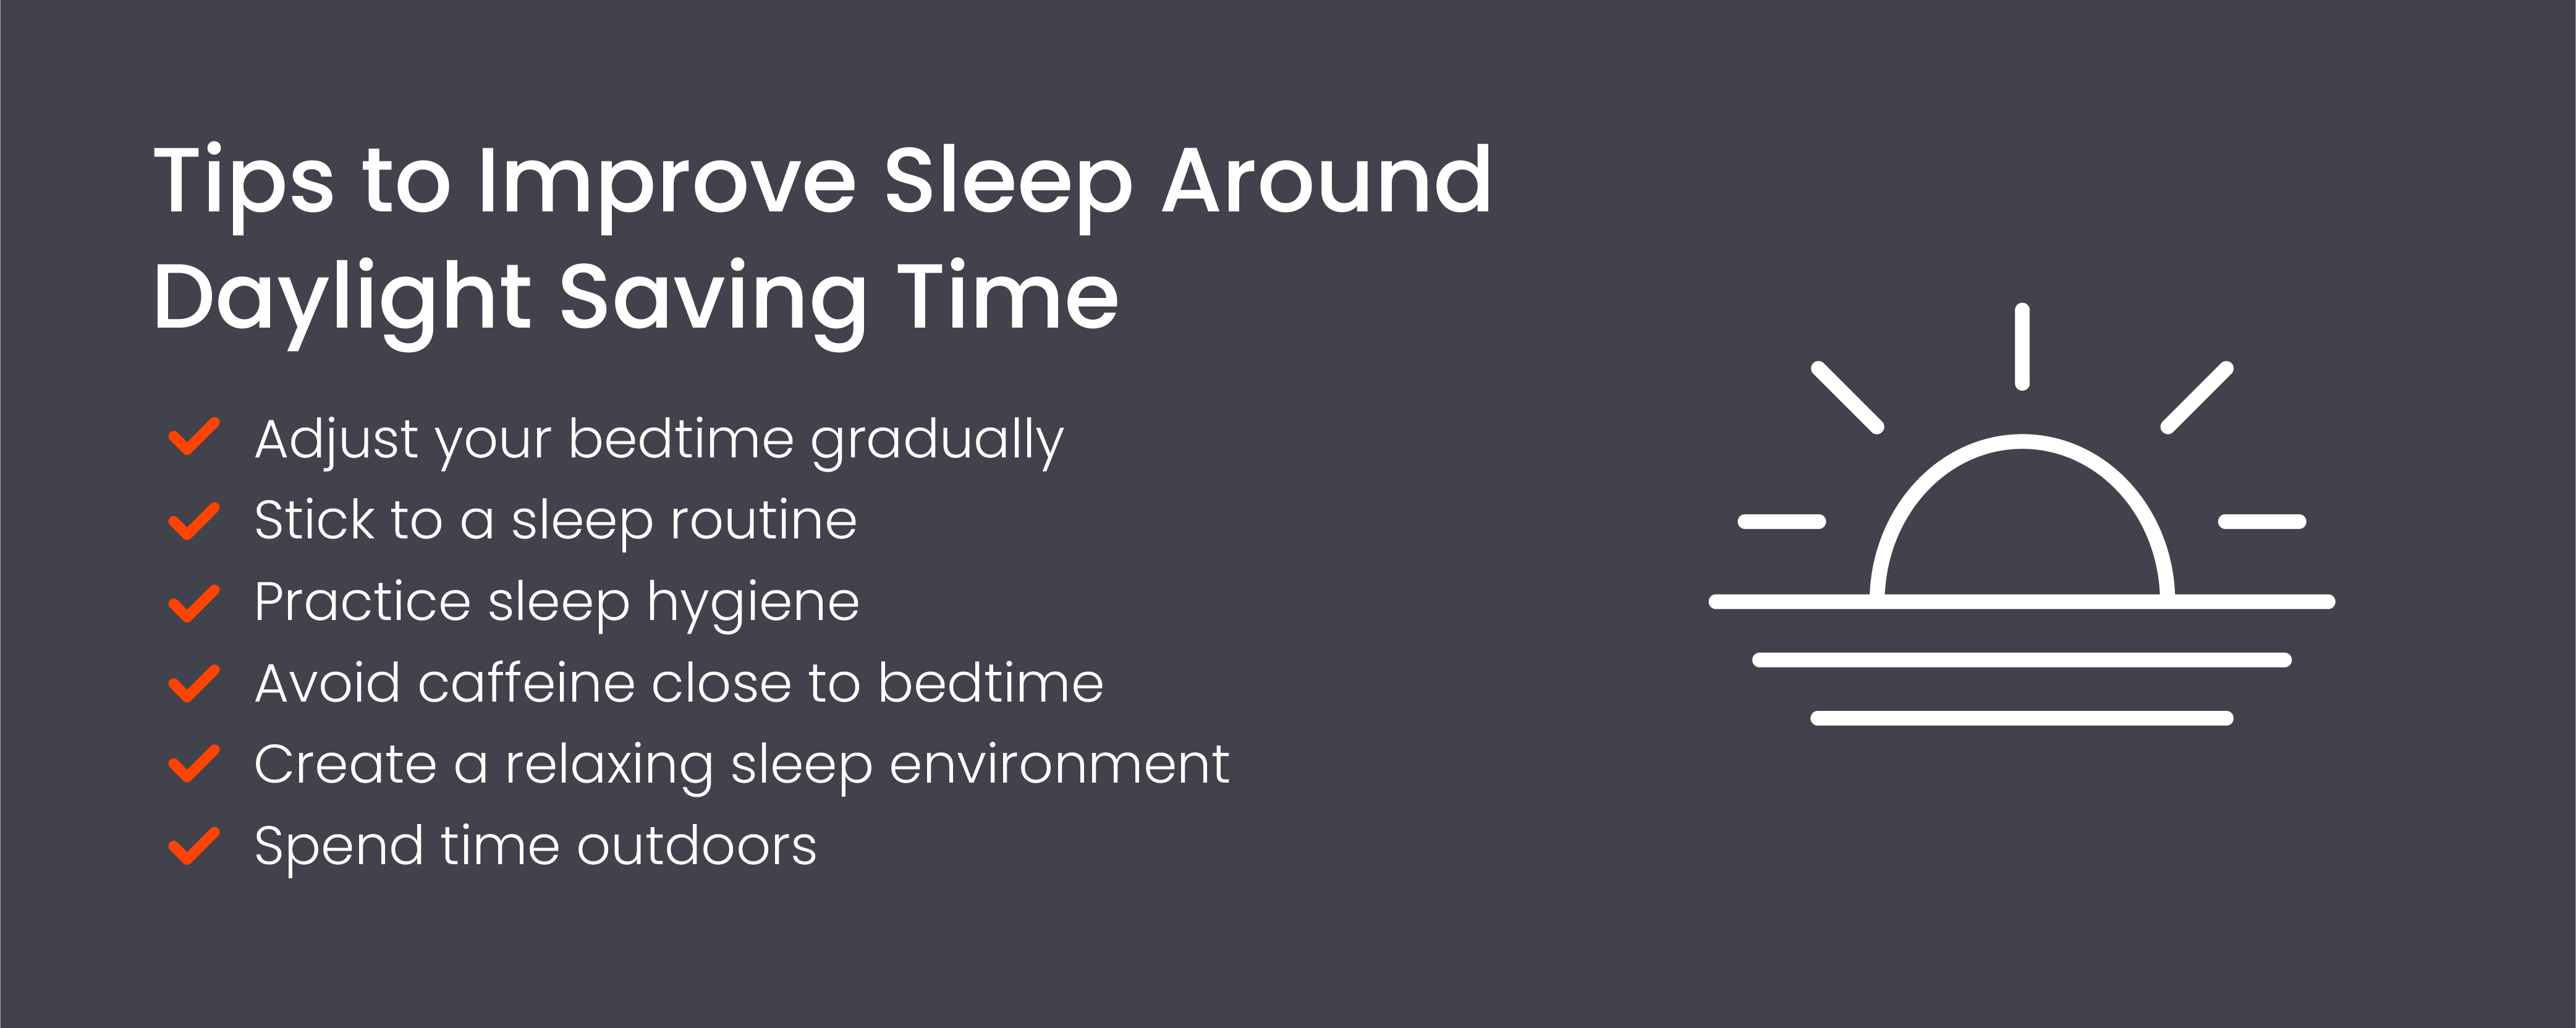 Tips to Improve Sleep Around Daylight Saving Time